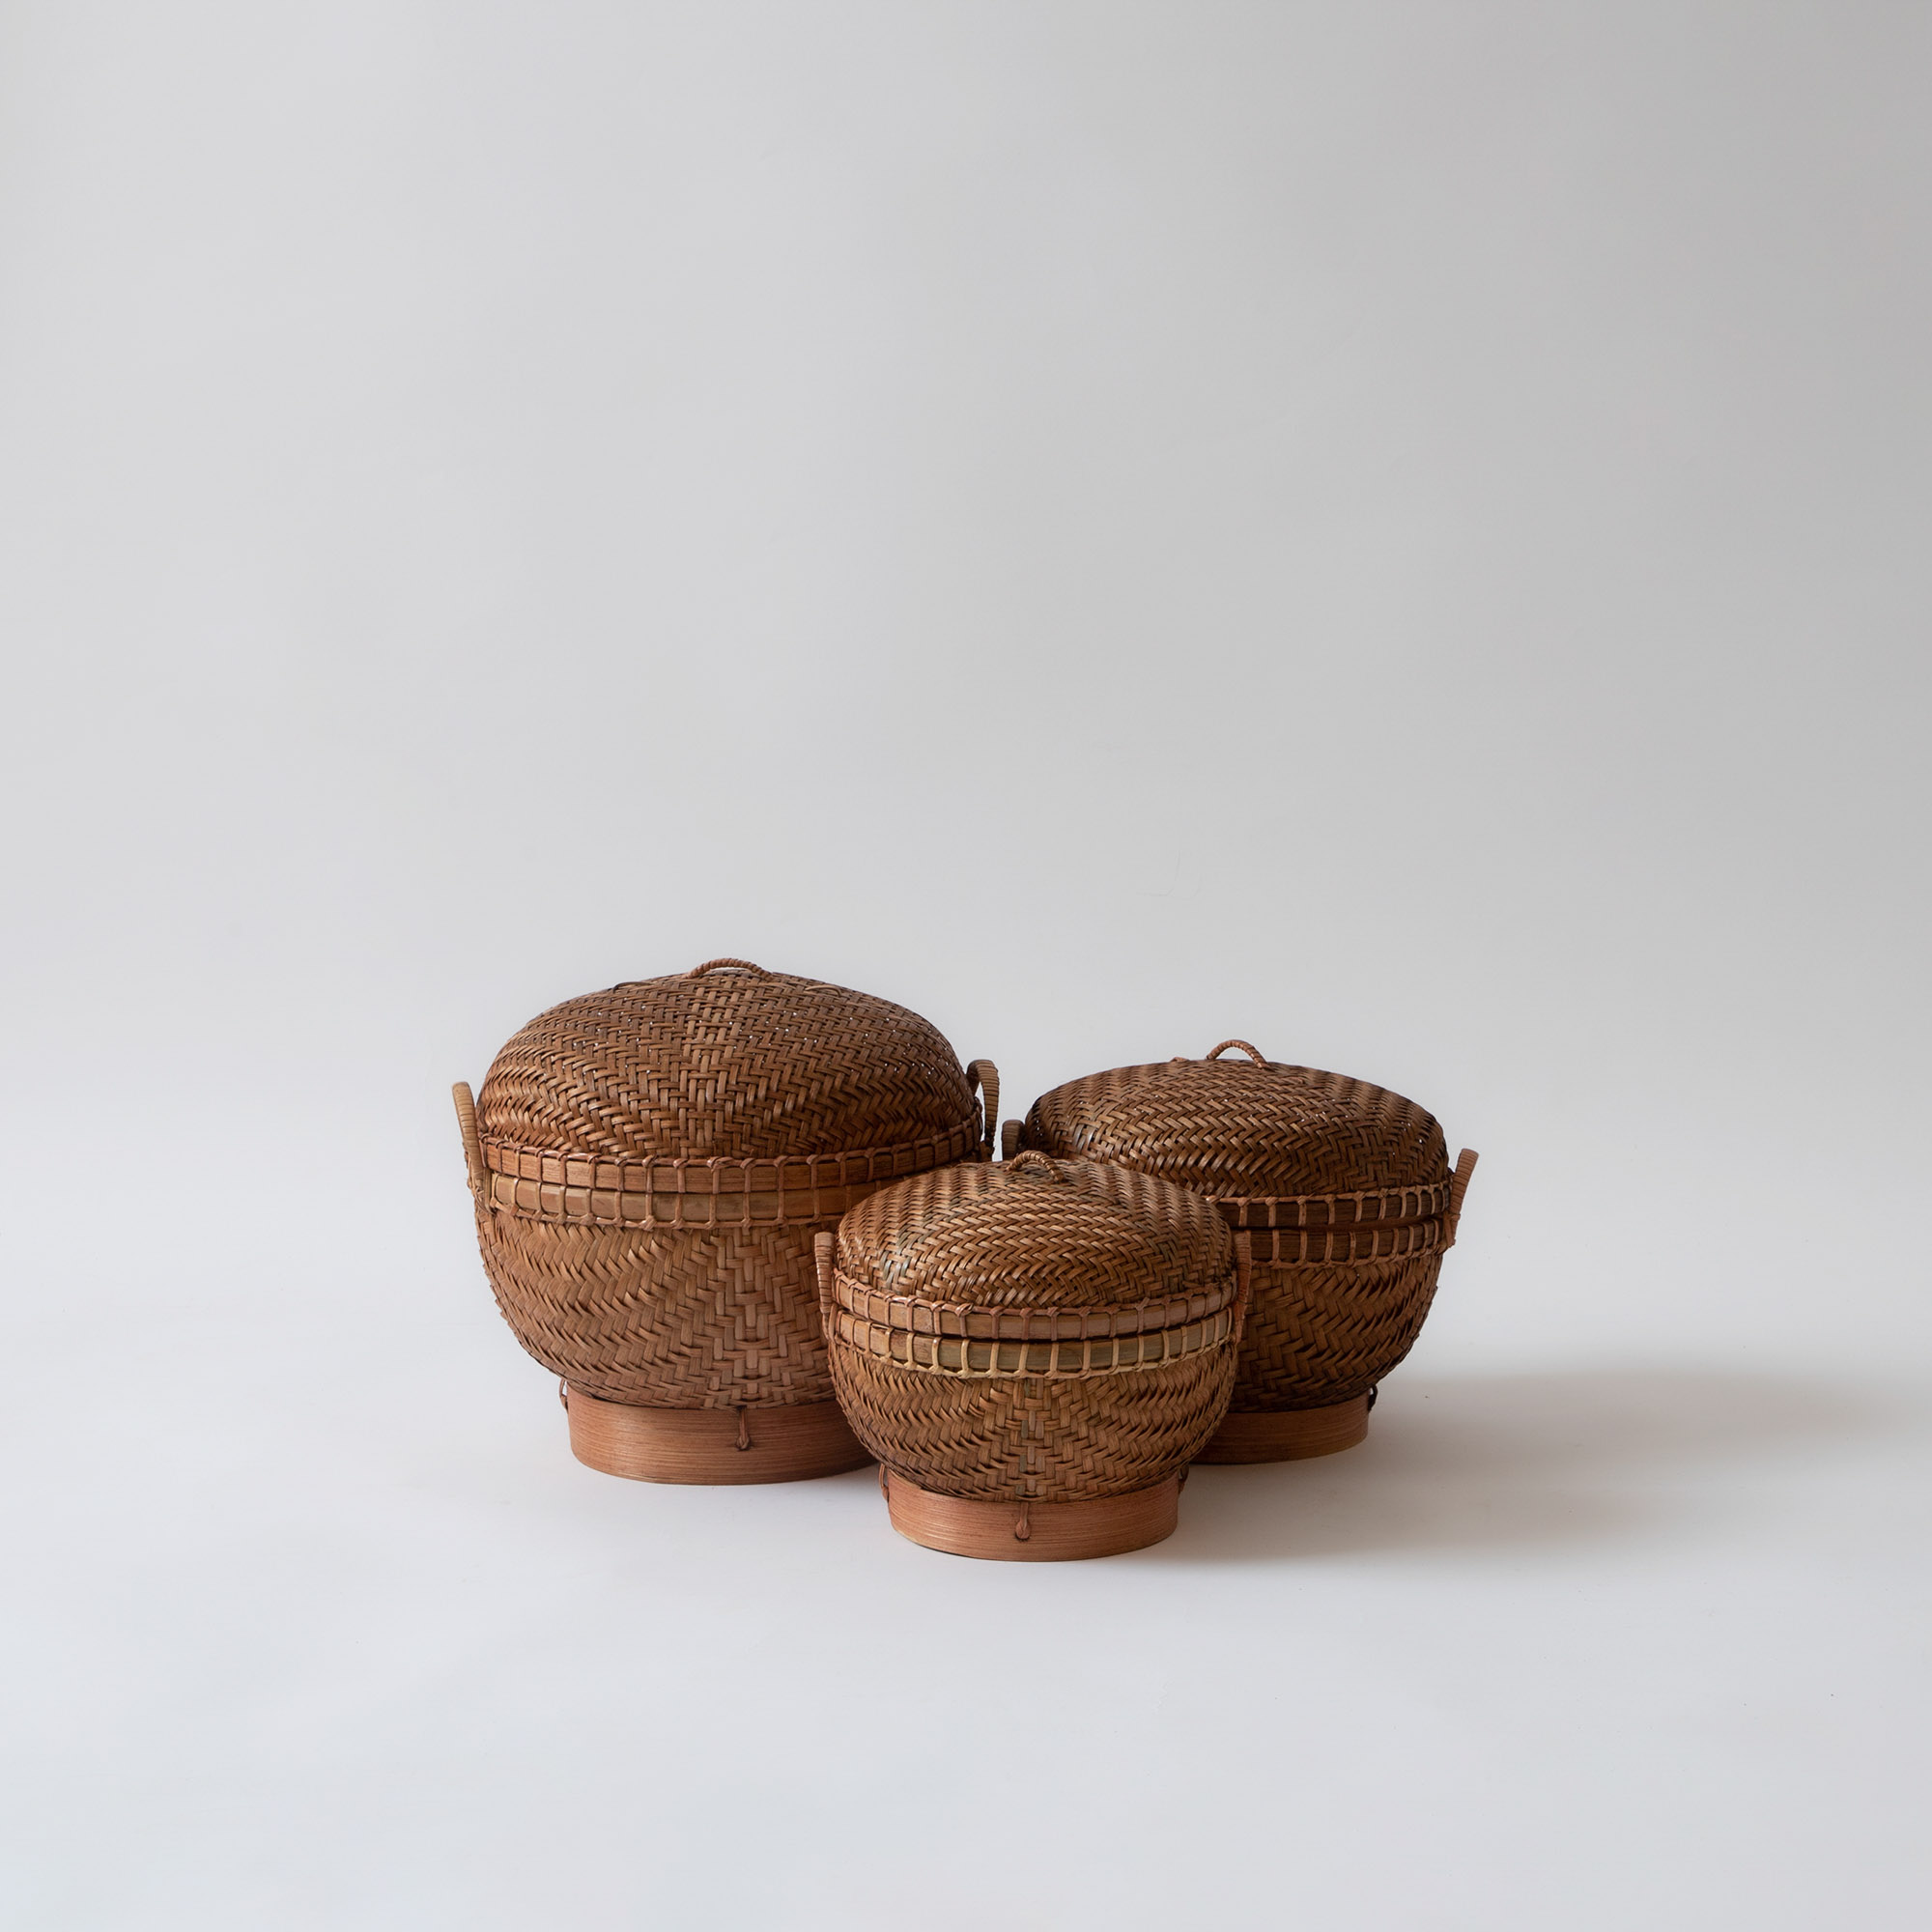 Bali Handwoven Lidded Baskets